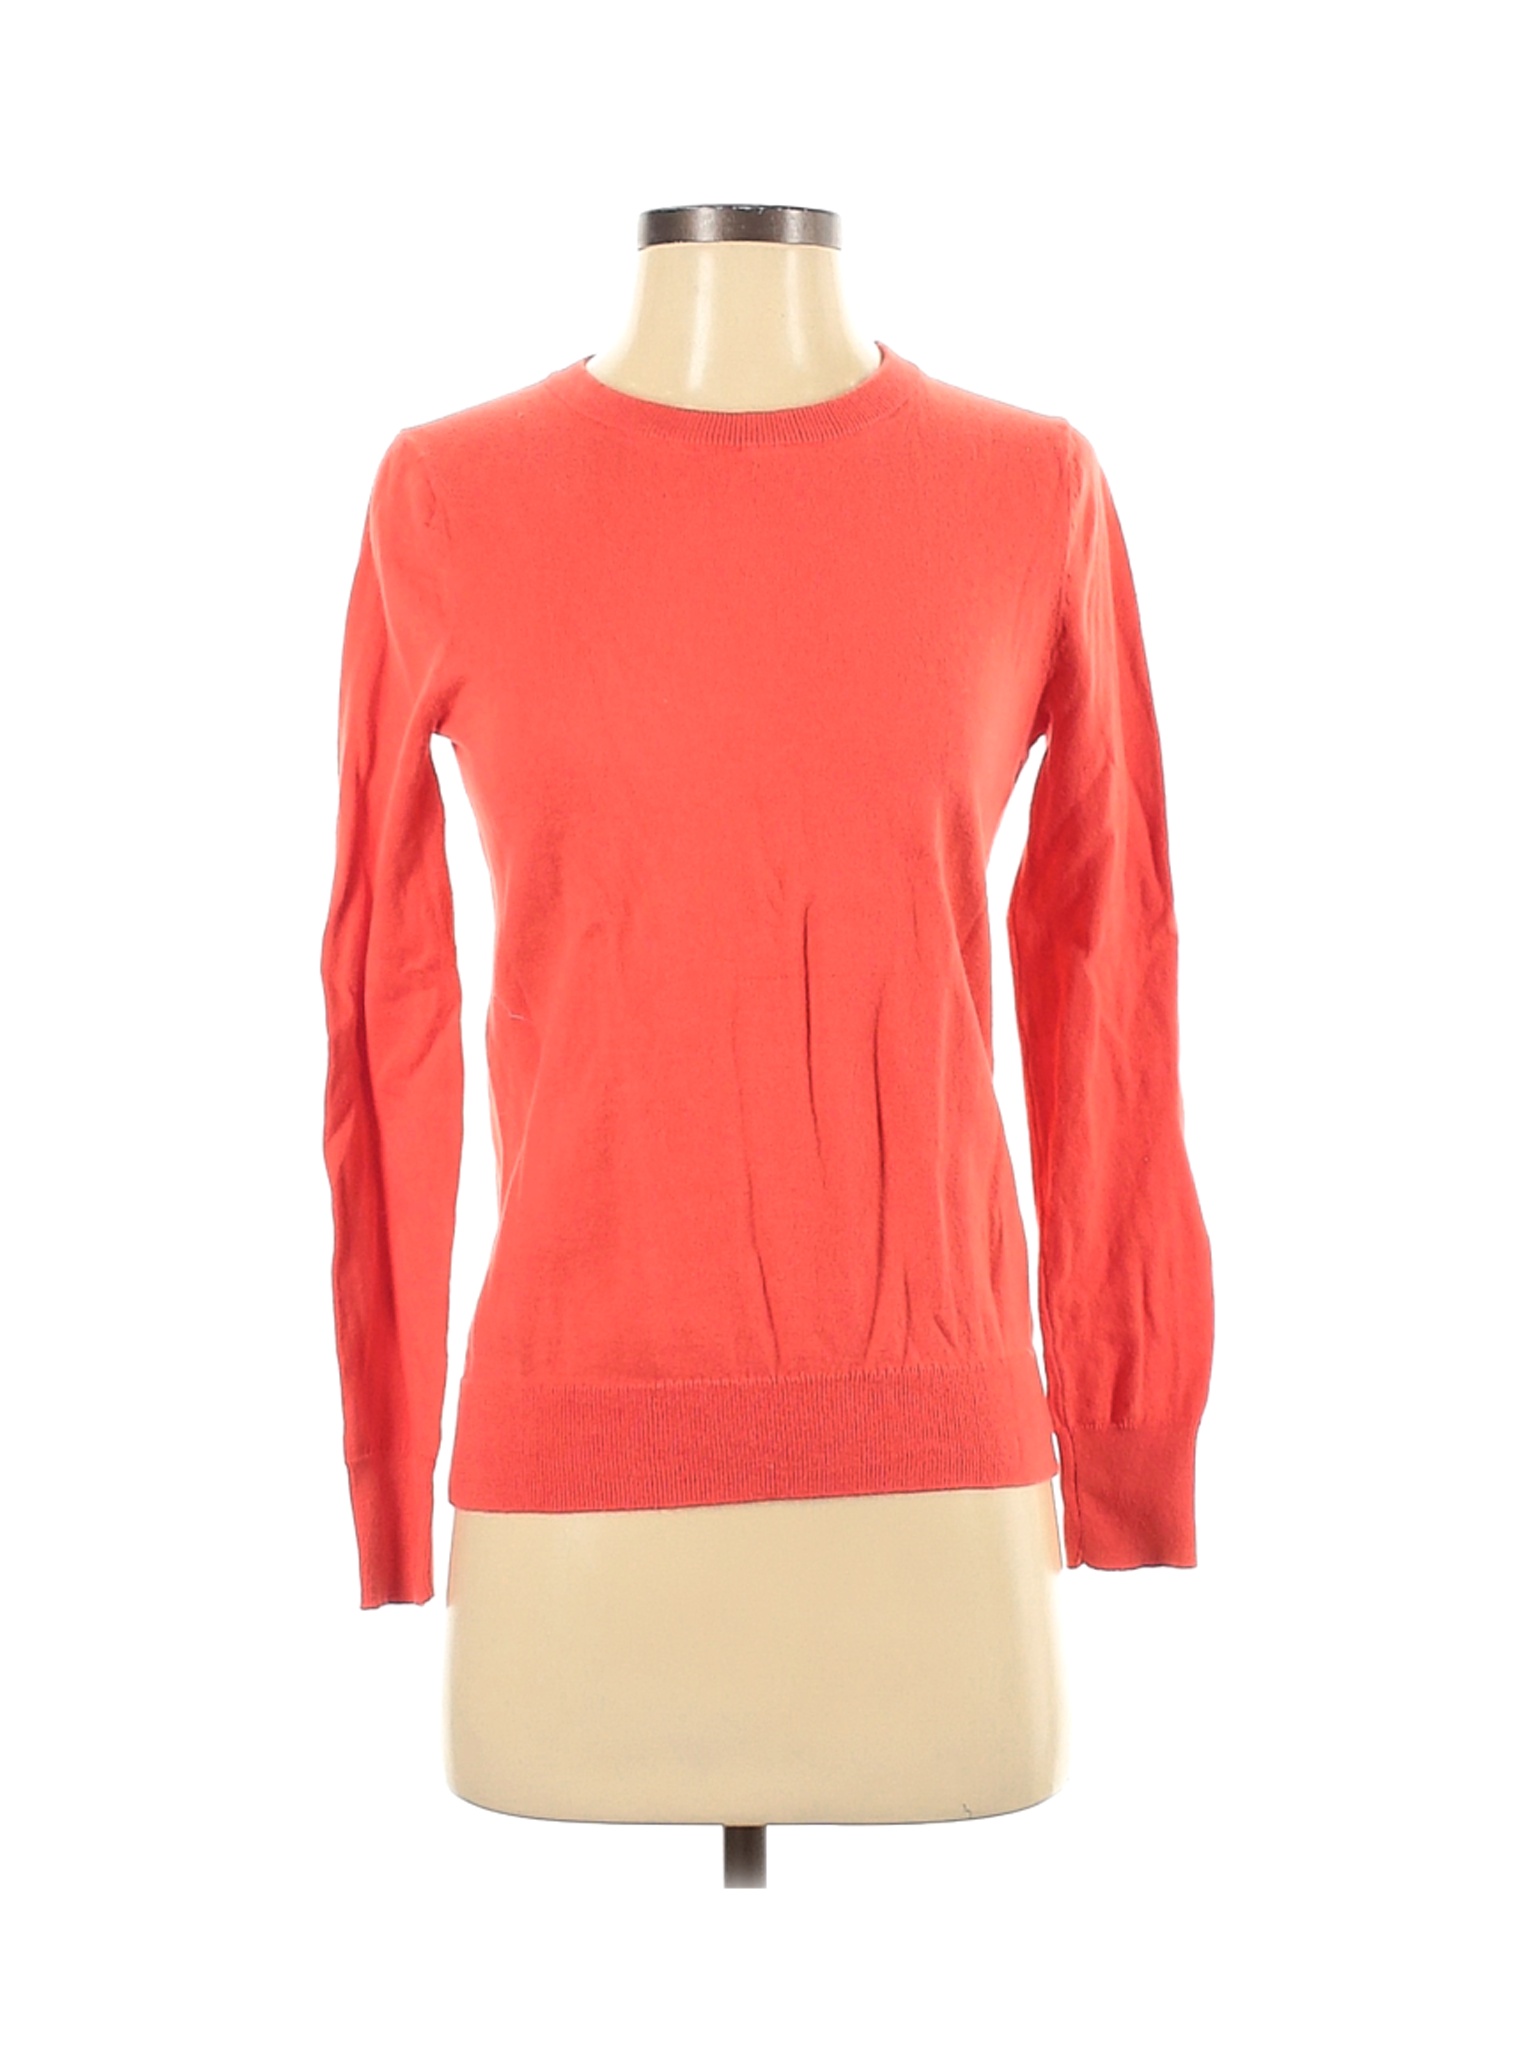 Gap Women Pink Pullover Sweater XS | eBay